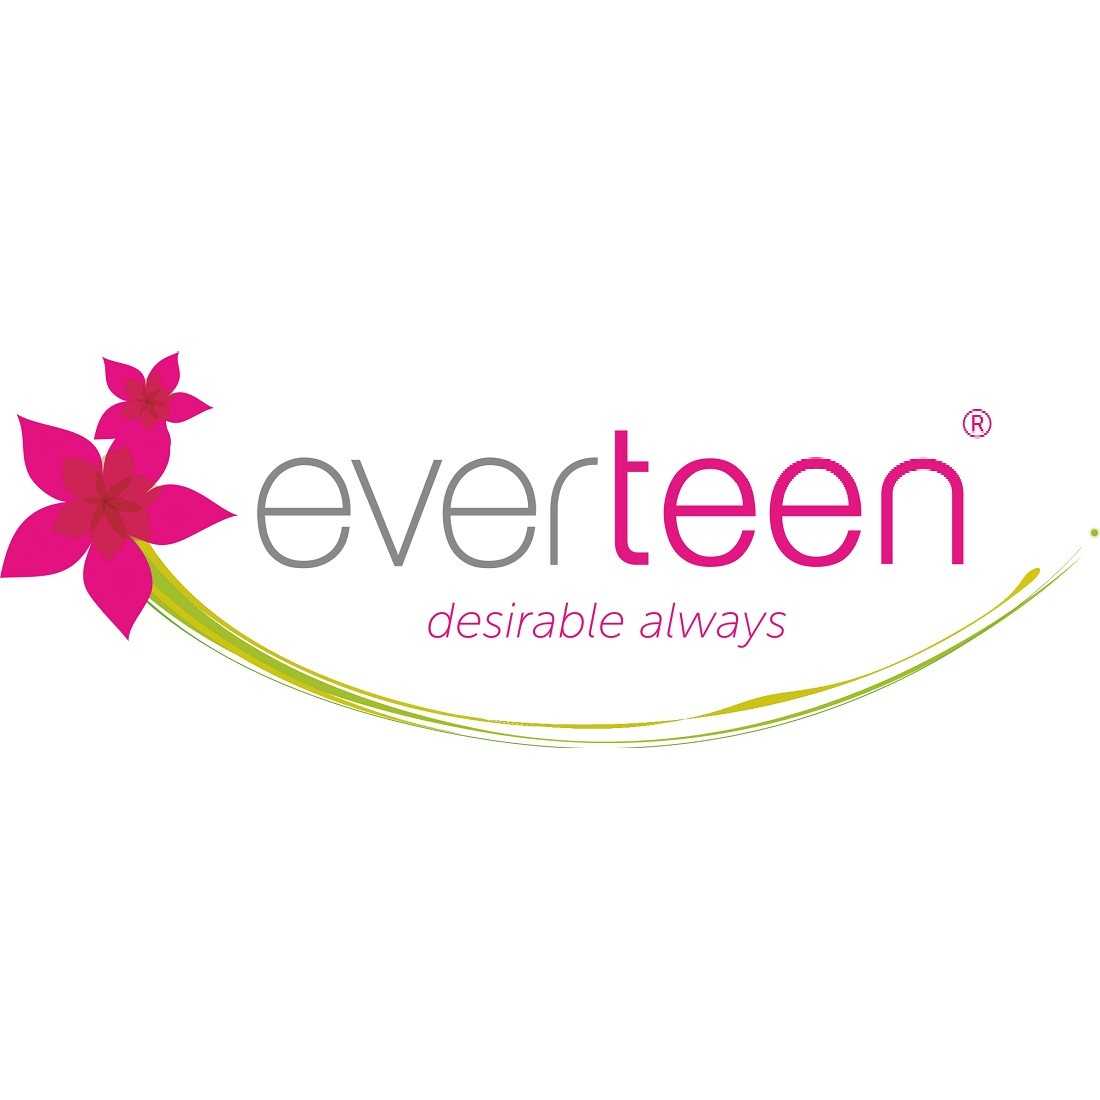 everteen Menstrual Cup Cleanser With Plants-Based Formula for Women - everteen